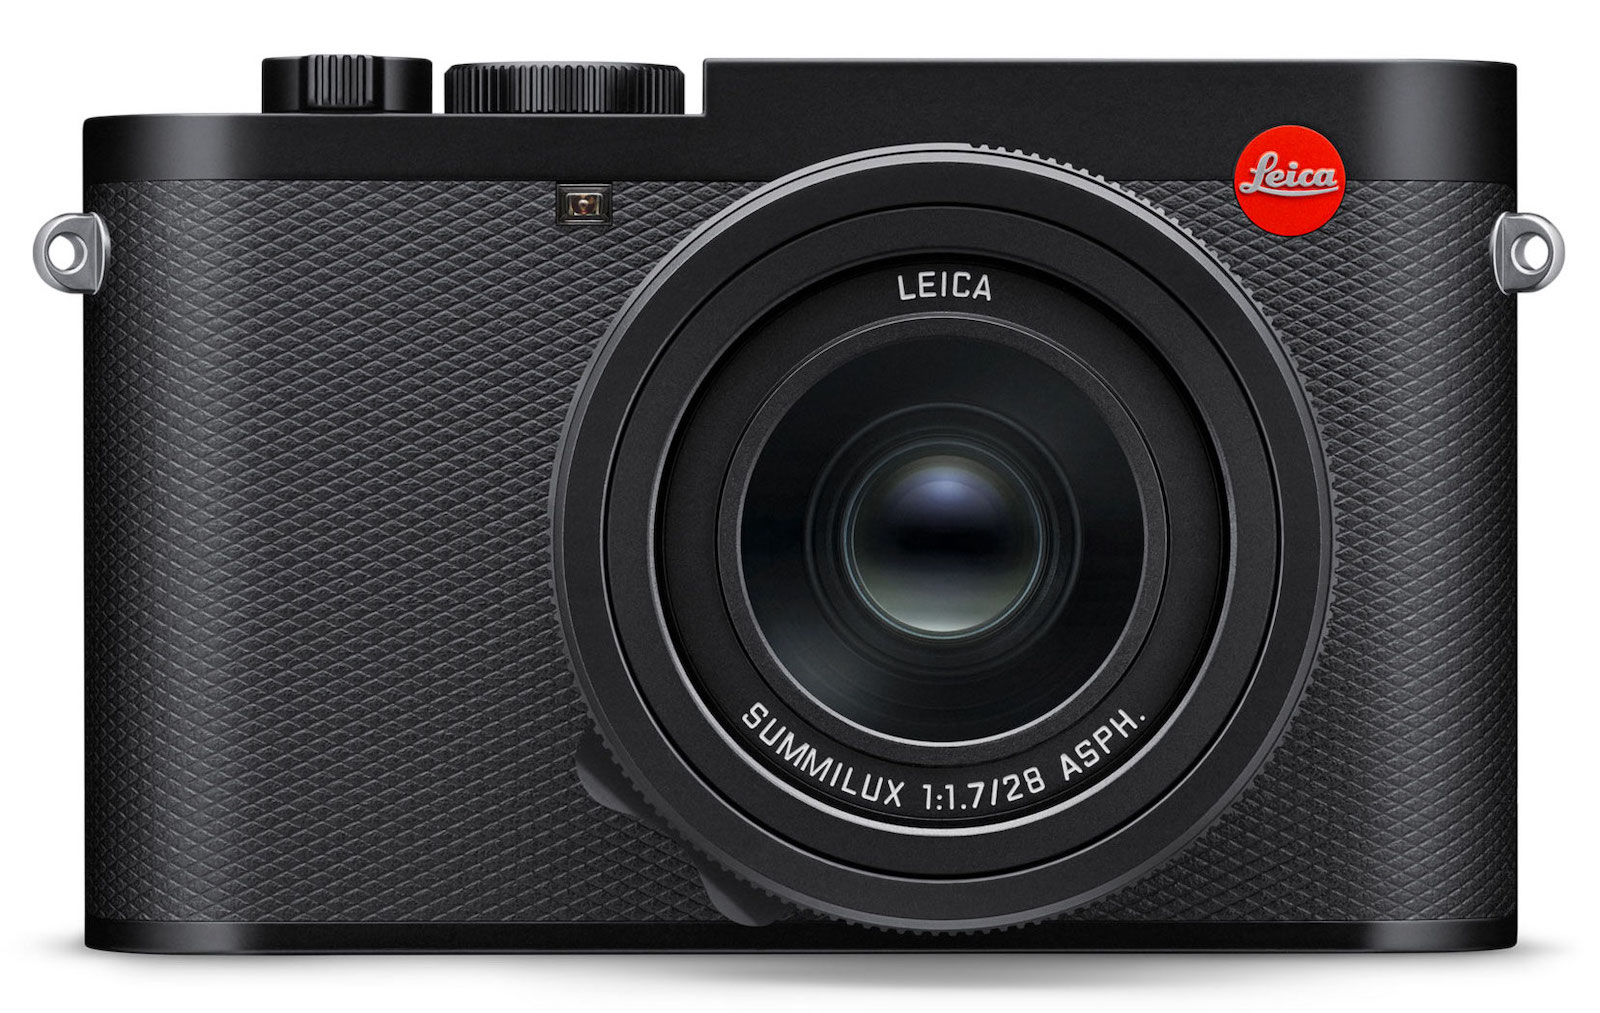 Leica Q3 leak shows it'll have a big bonus for street photography